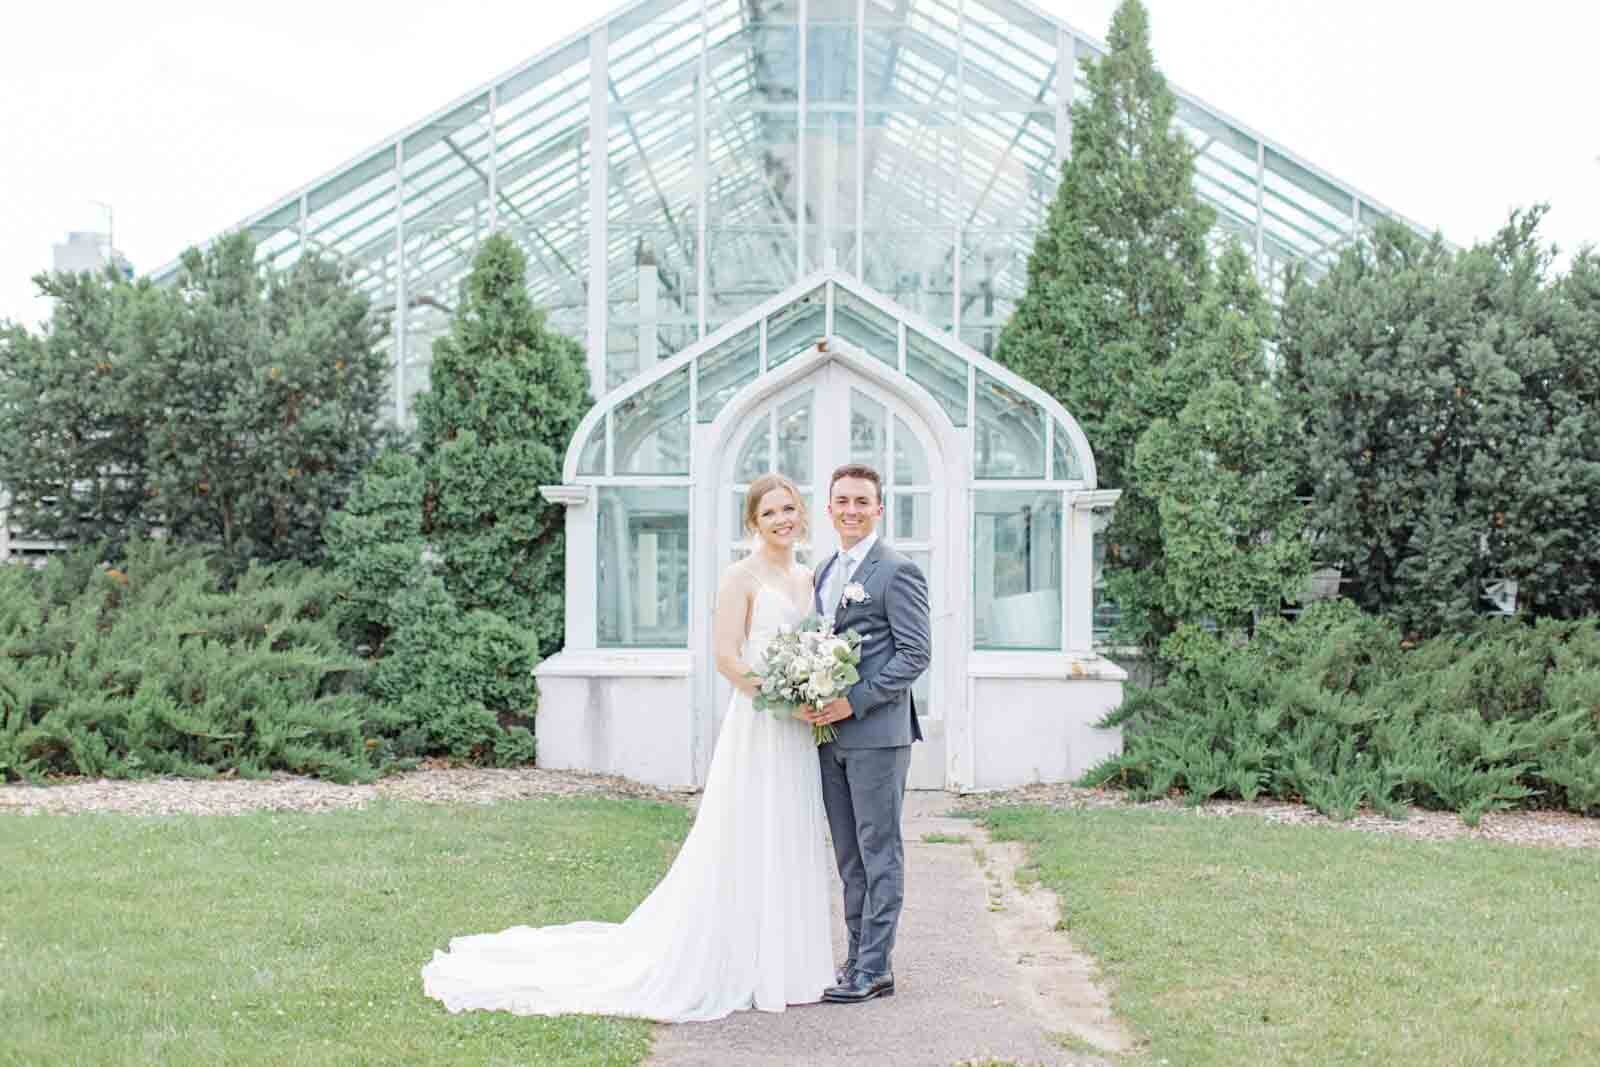 Grey Loft Studio - Bethany and Luc Barette - Wedding Photography Wedding Videography Ottawa